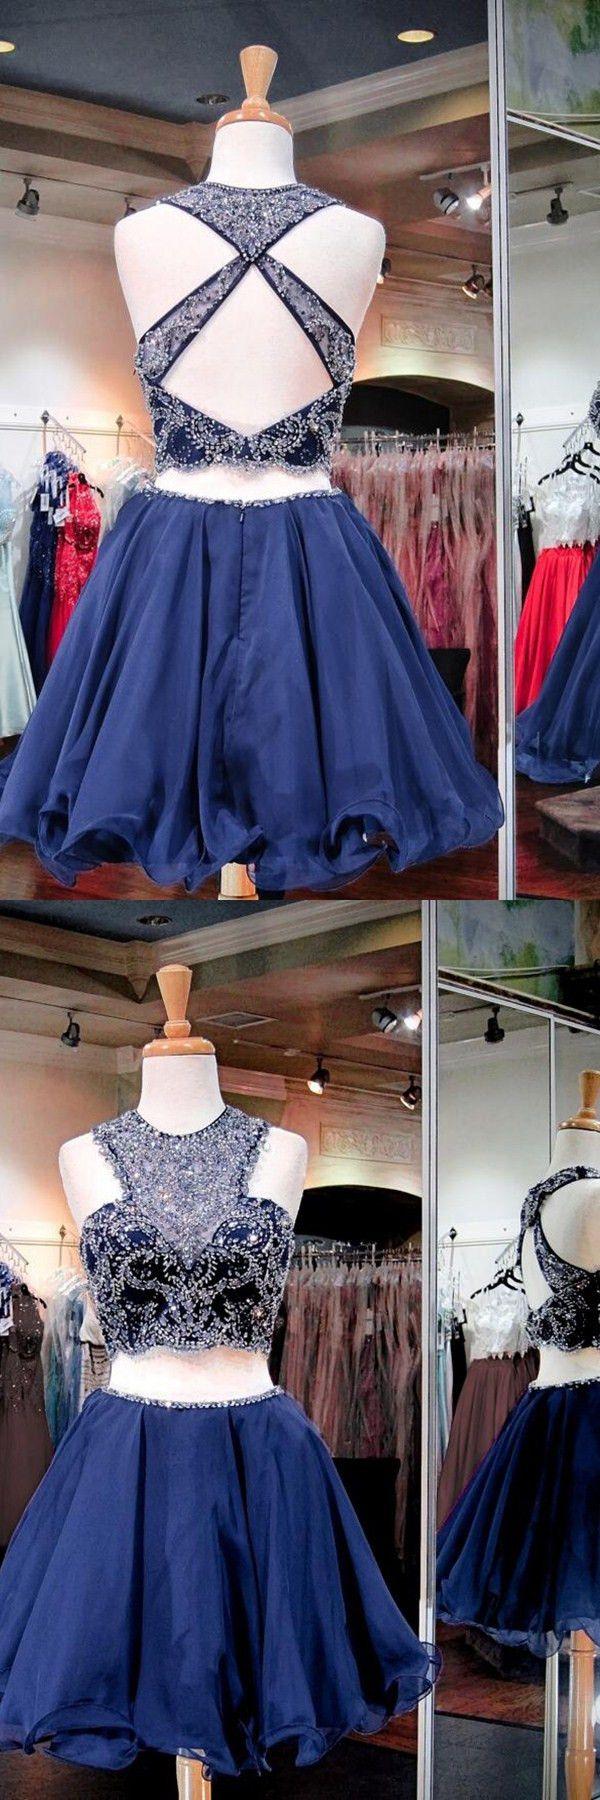 زفاف - Two Piece Jewel Open Back Short Navy Blue Tulle Homecoming Dress With Beading